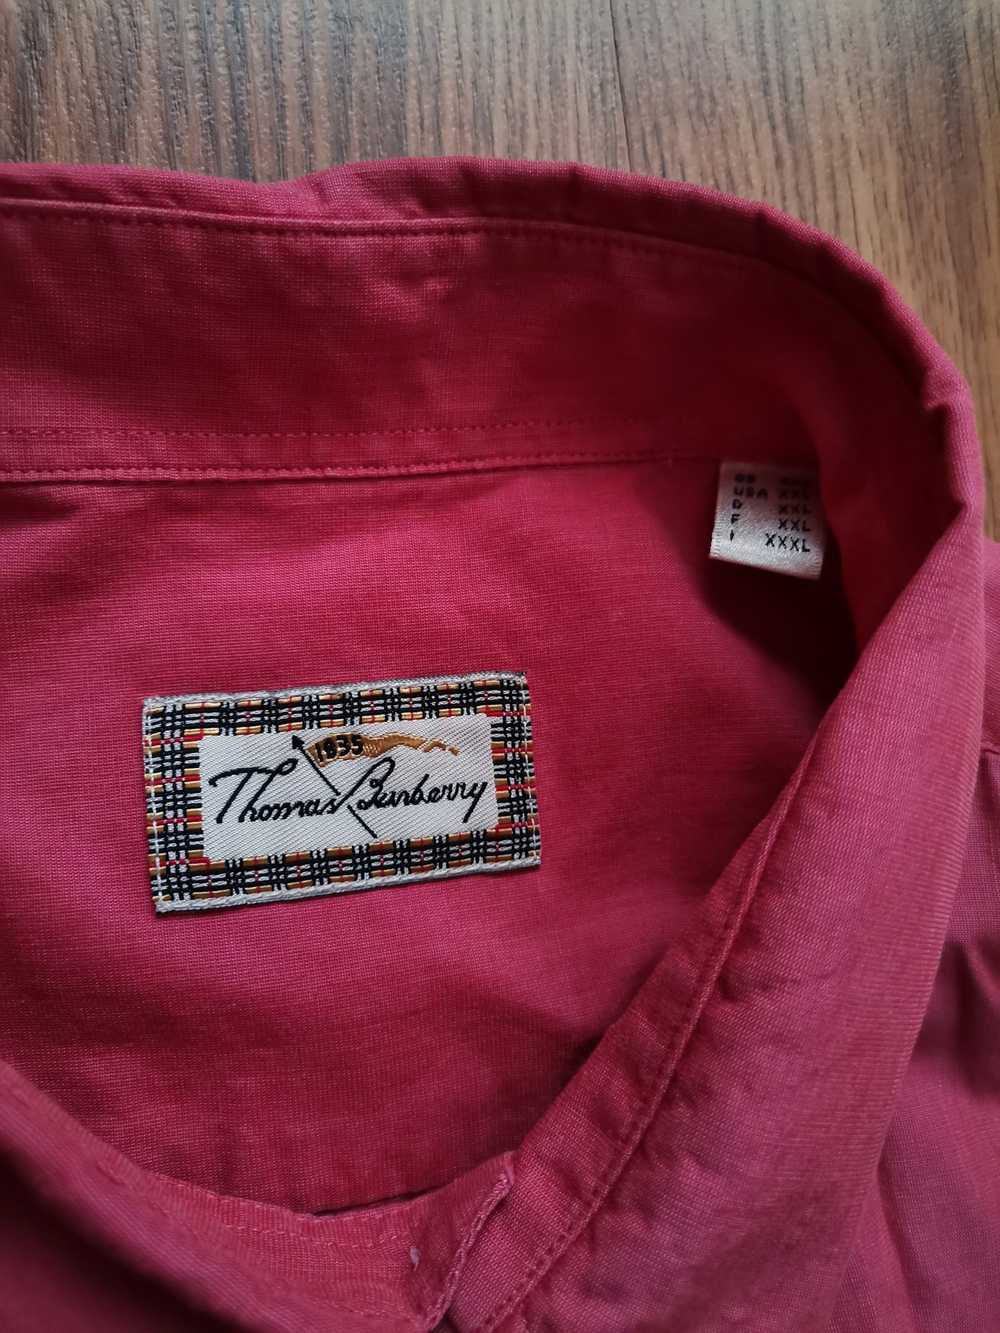 Burberry × Vintage Vintage Thomas Burberry Shirt - image 3